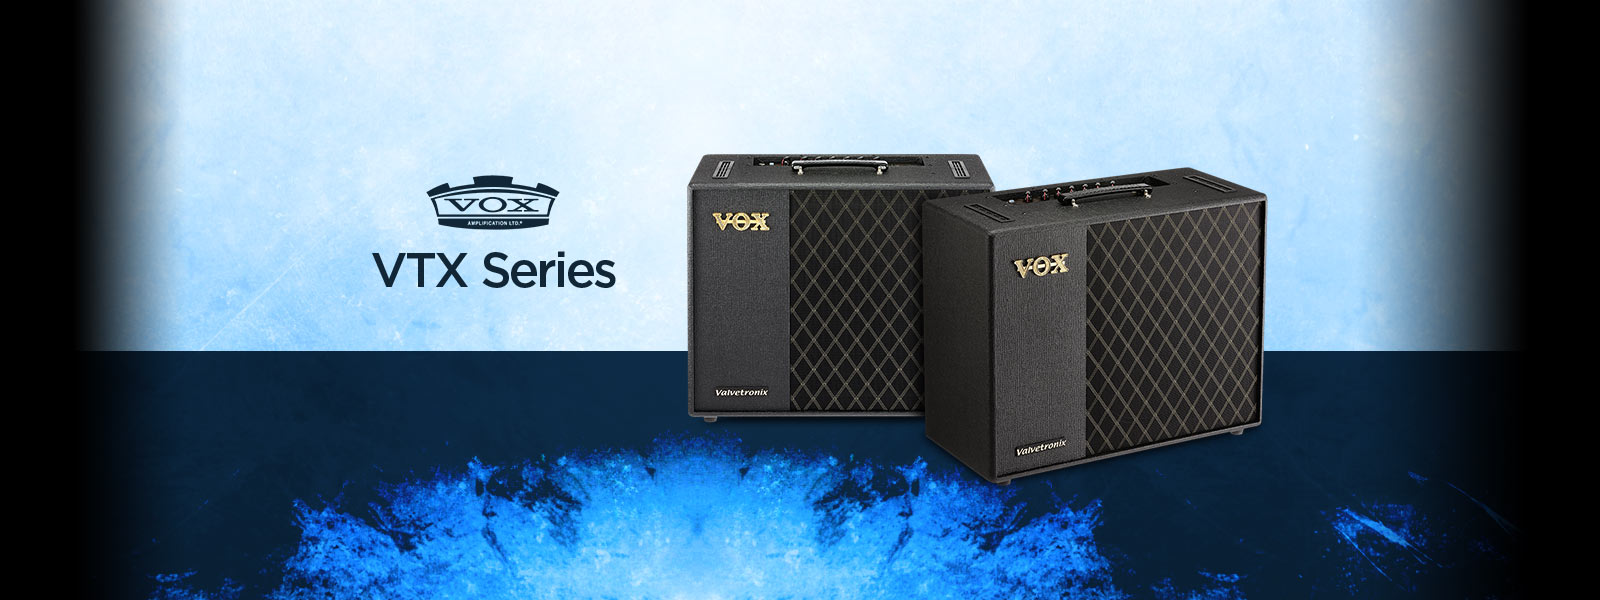 VOX VTX Series Amplifiers